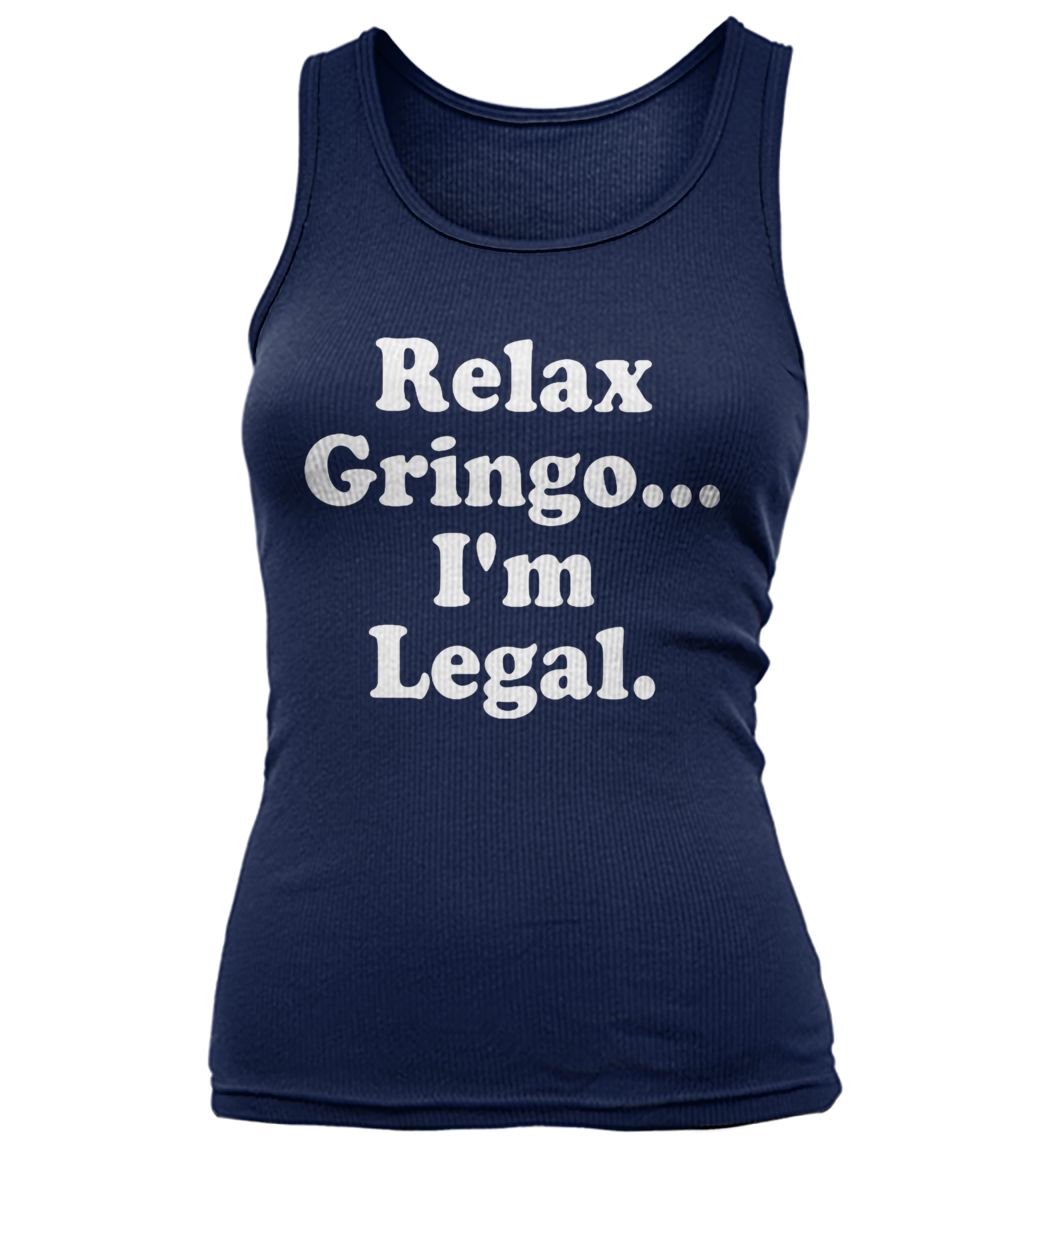 Relax gringo I'm legal women's tank top